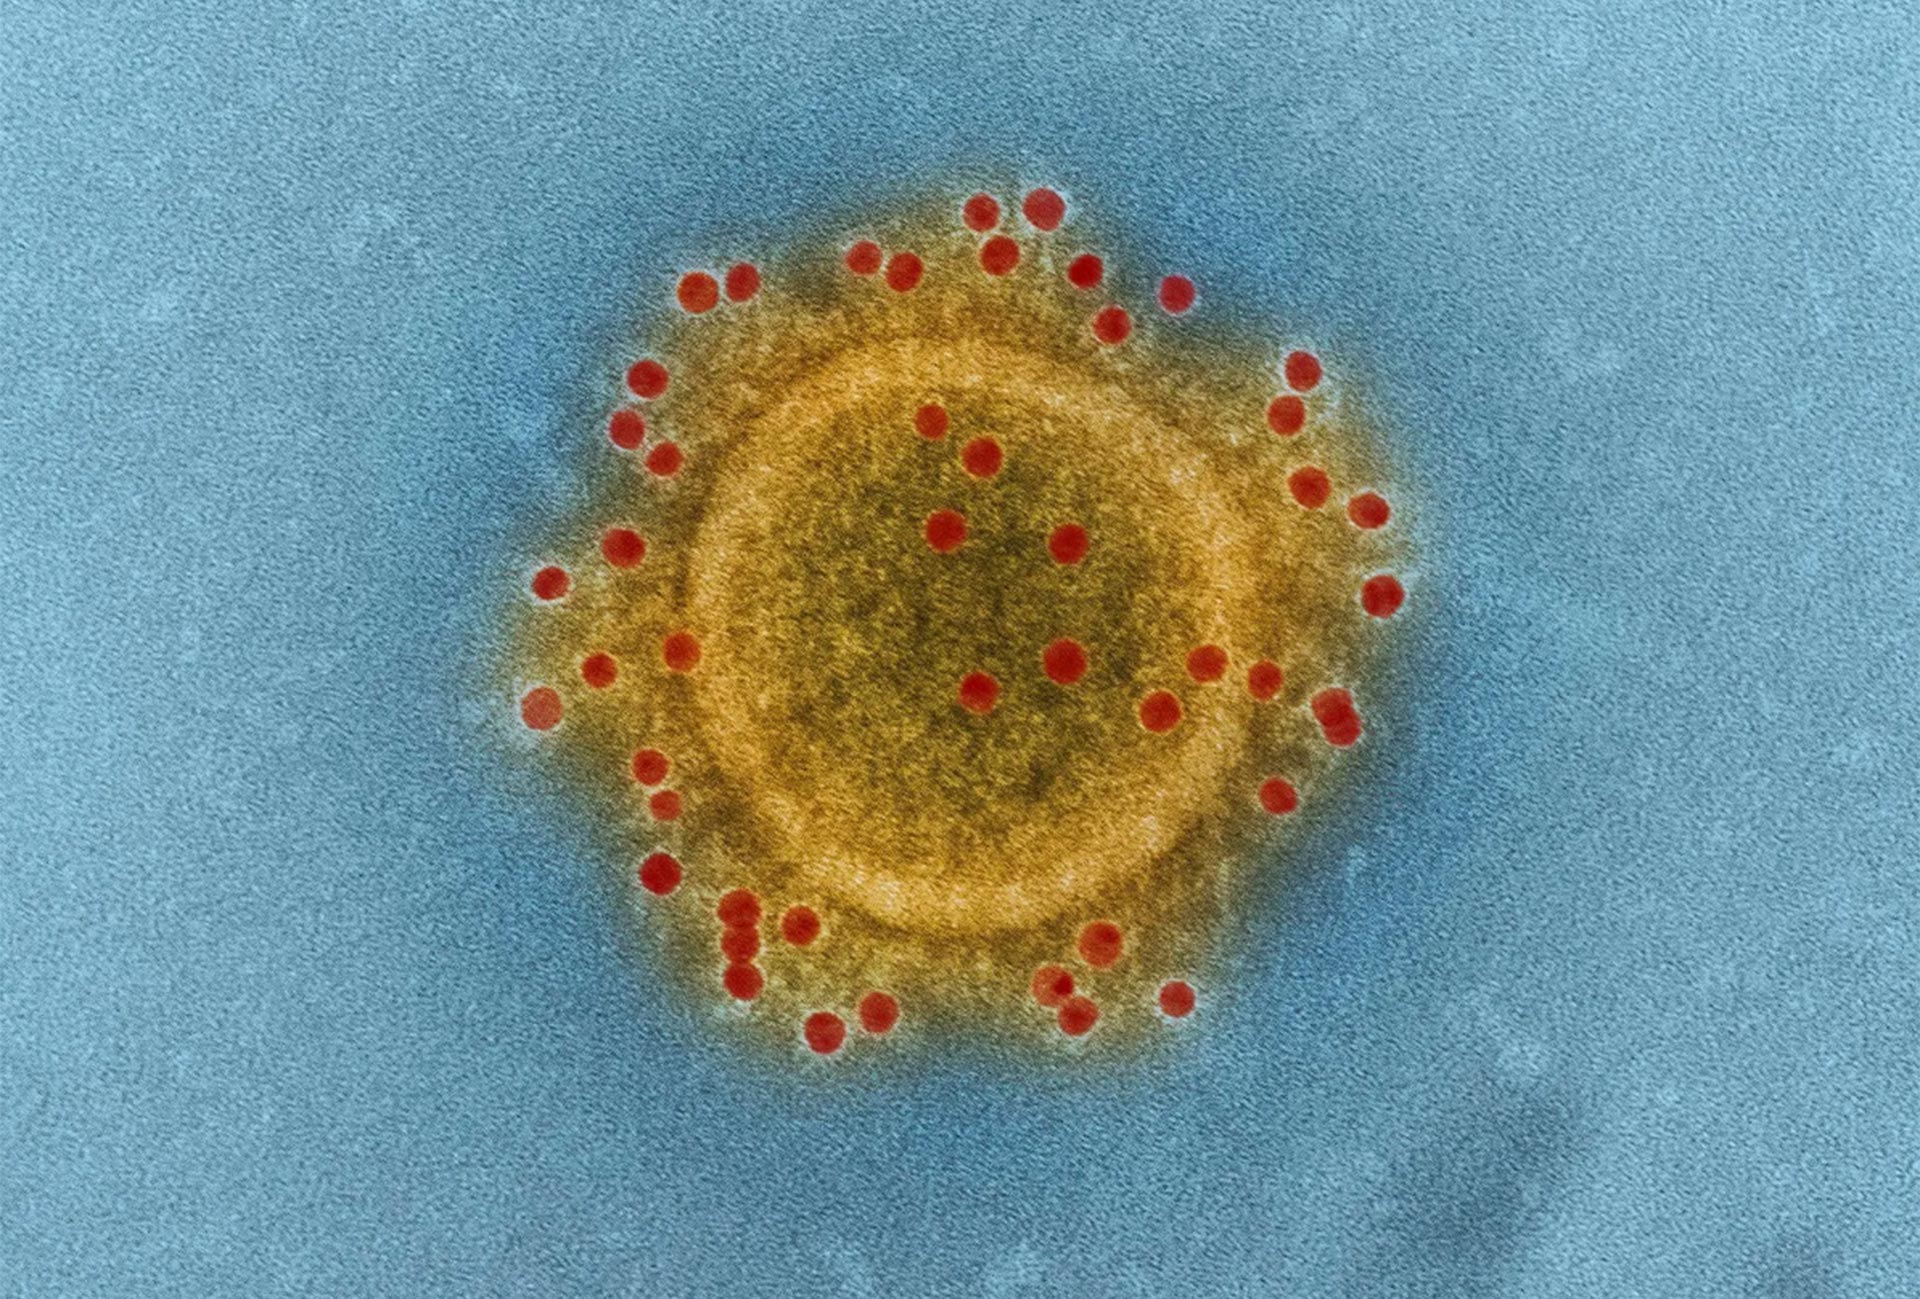 A MERS coronavirus particle.Credit...NIAID